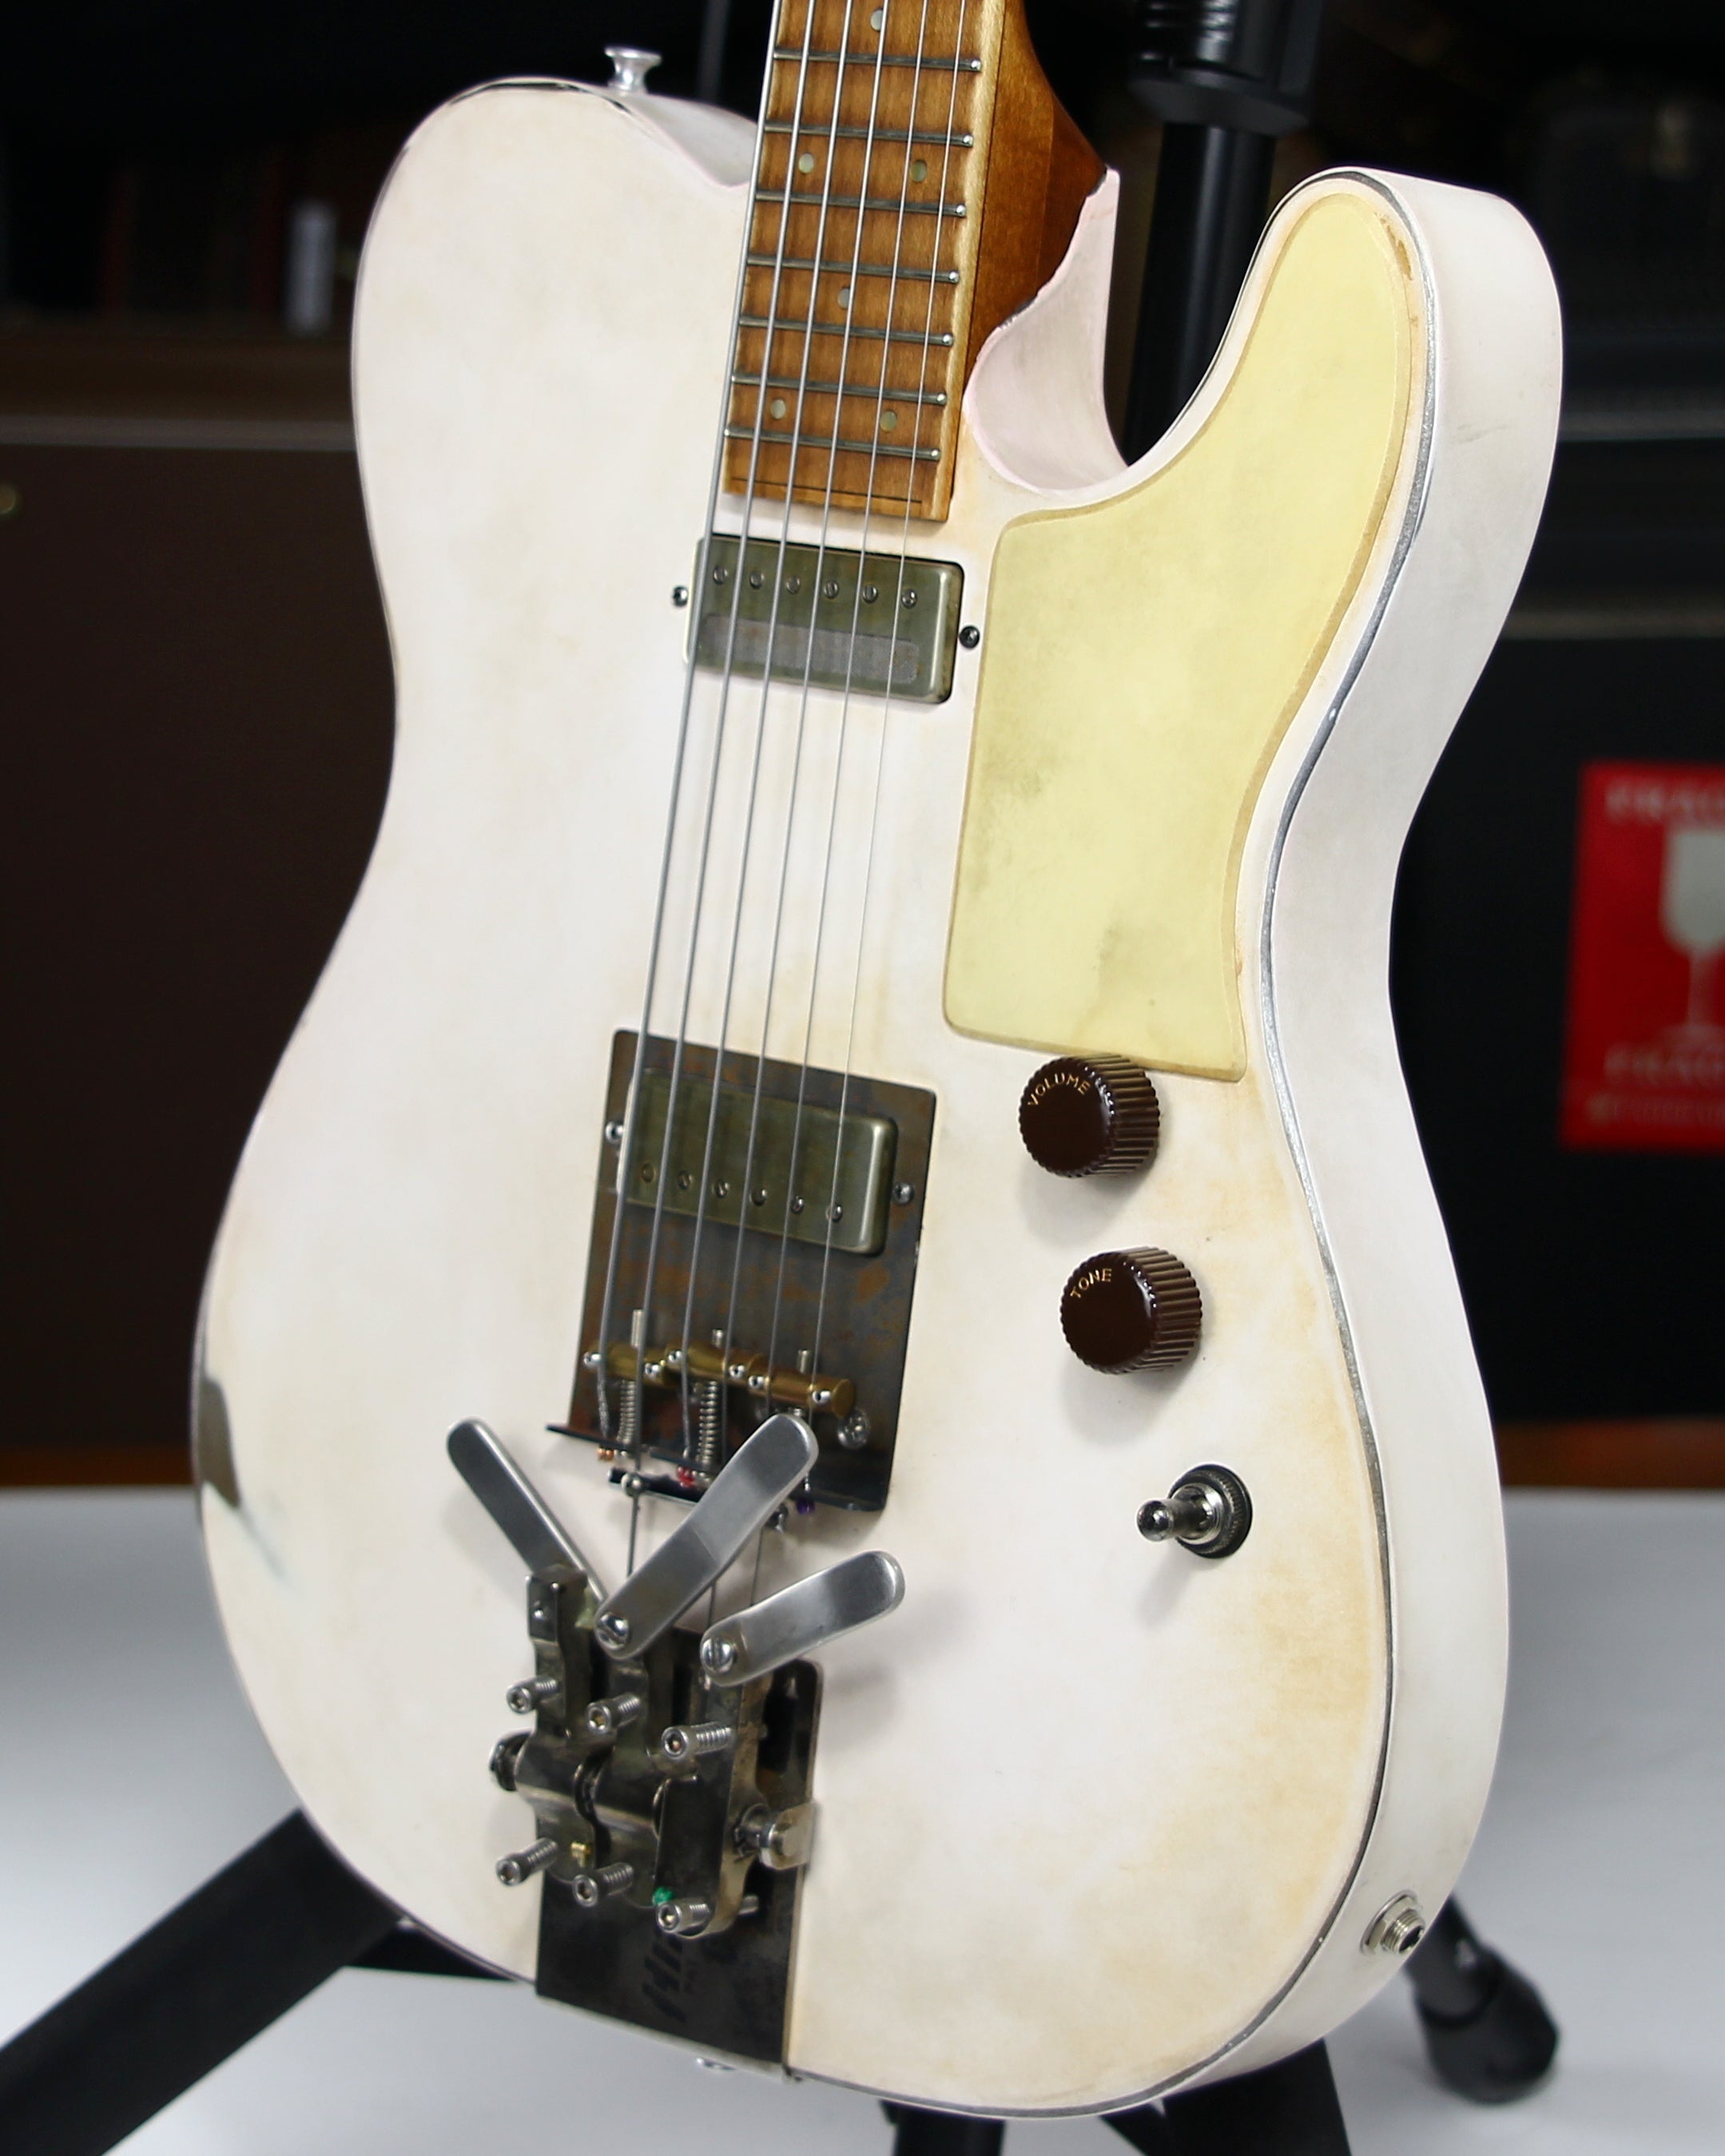 *SOLD*  Mule Resophonics MULECASTER Tele Relic Steel Body Baritone Guitar -- Hipshot Palm Bender, Telecaster, White